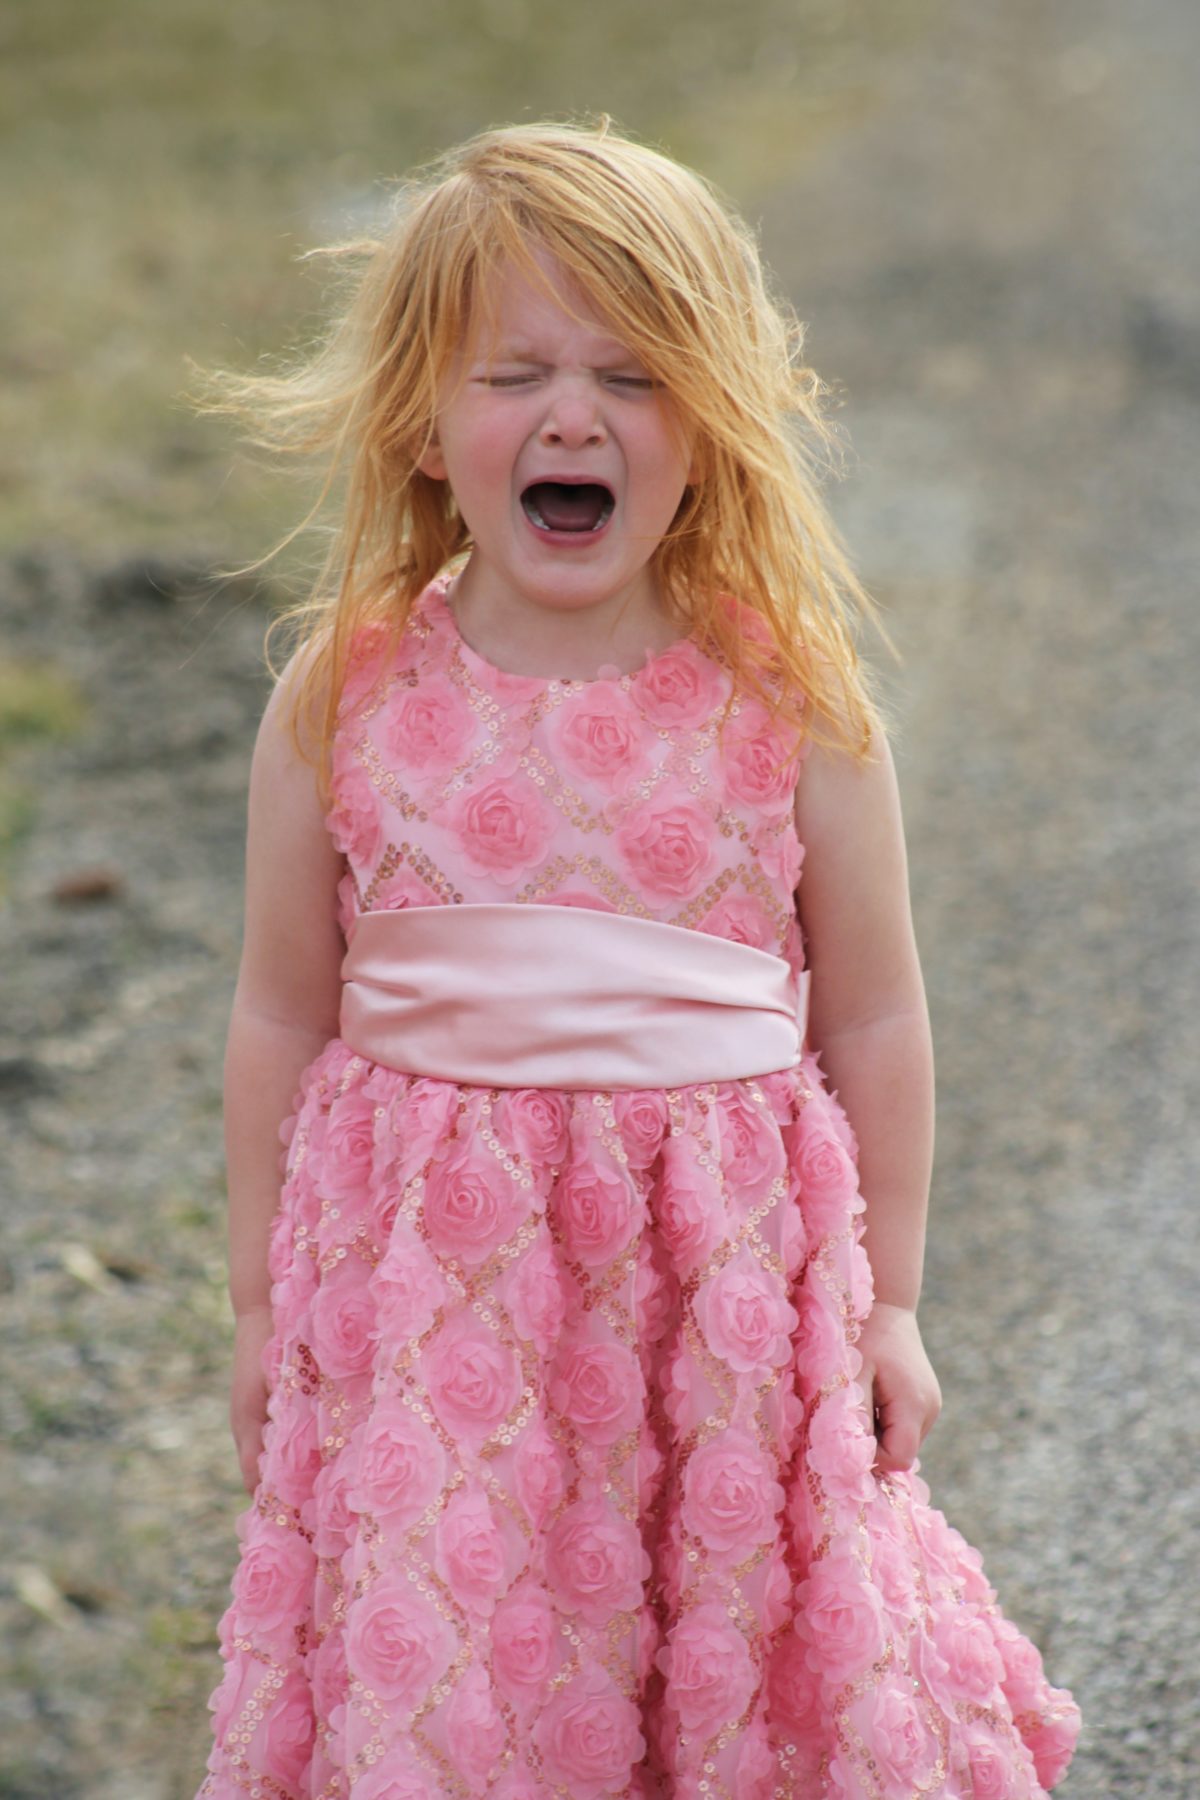 Young girl crying.